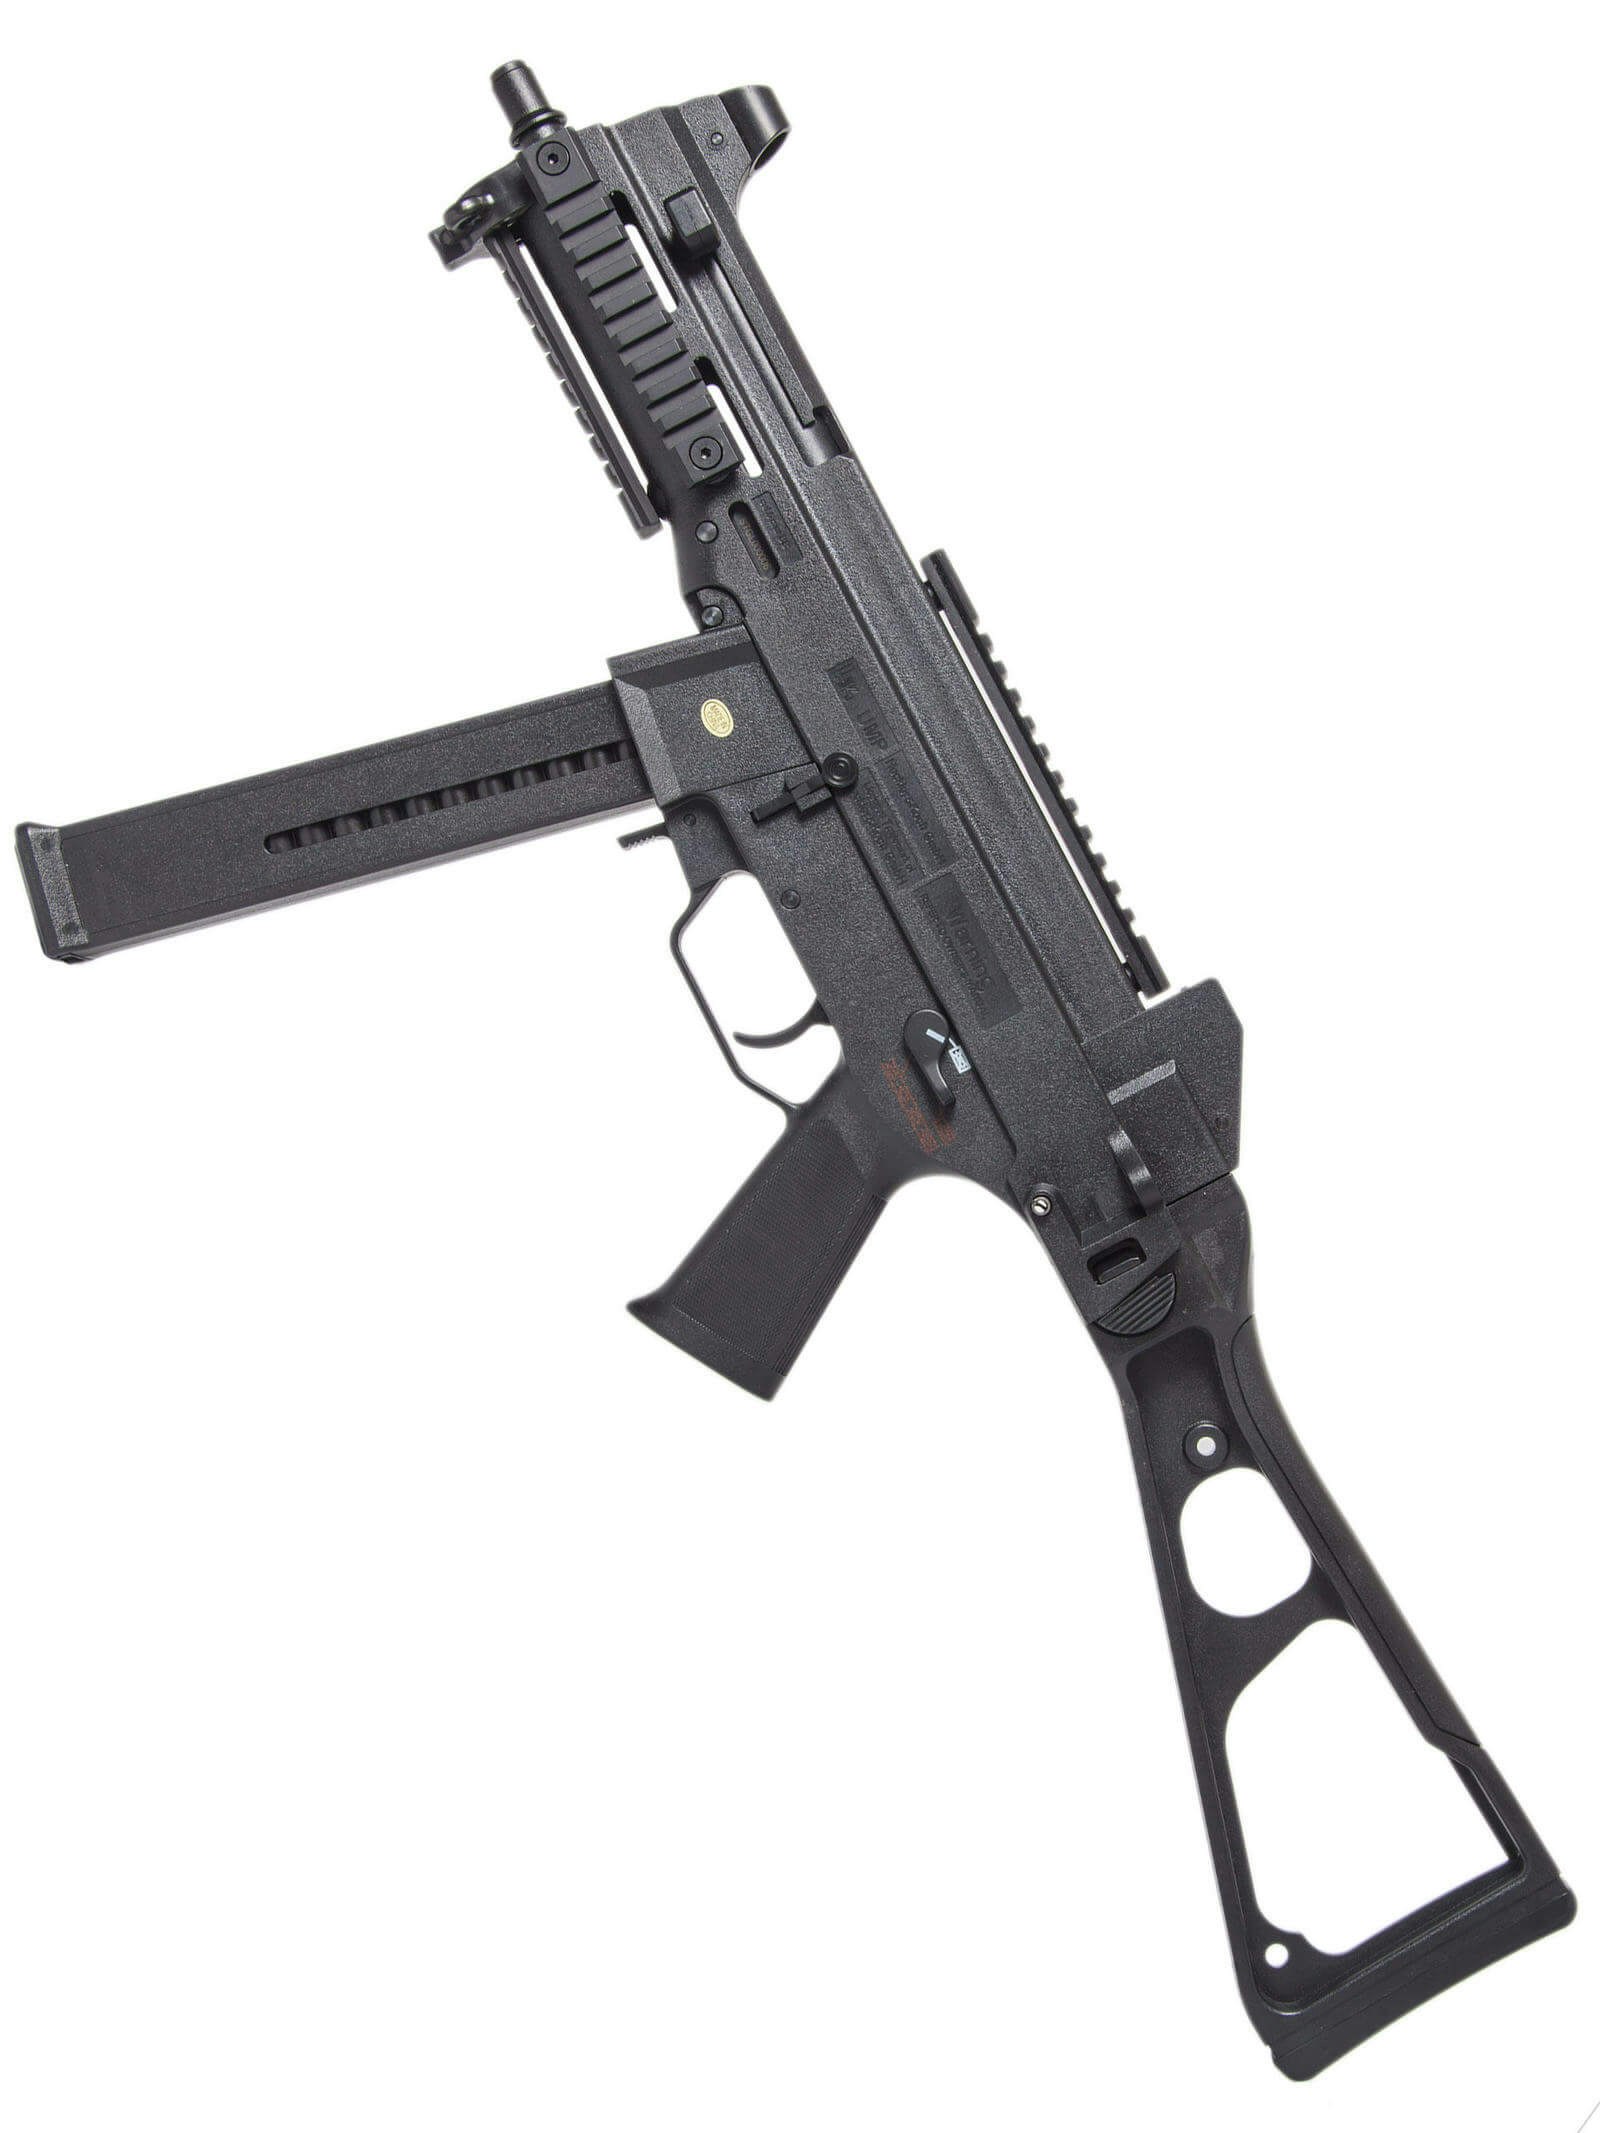 HK UMP submachine gun - Buy Royalty Free 3D model by filthycent ...